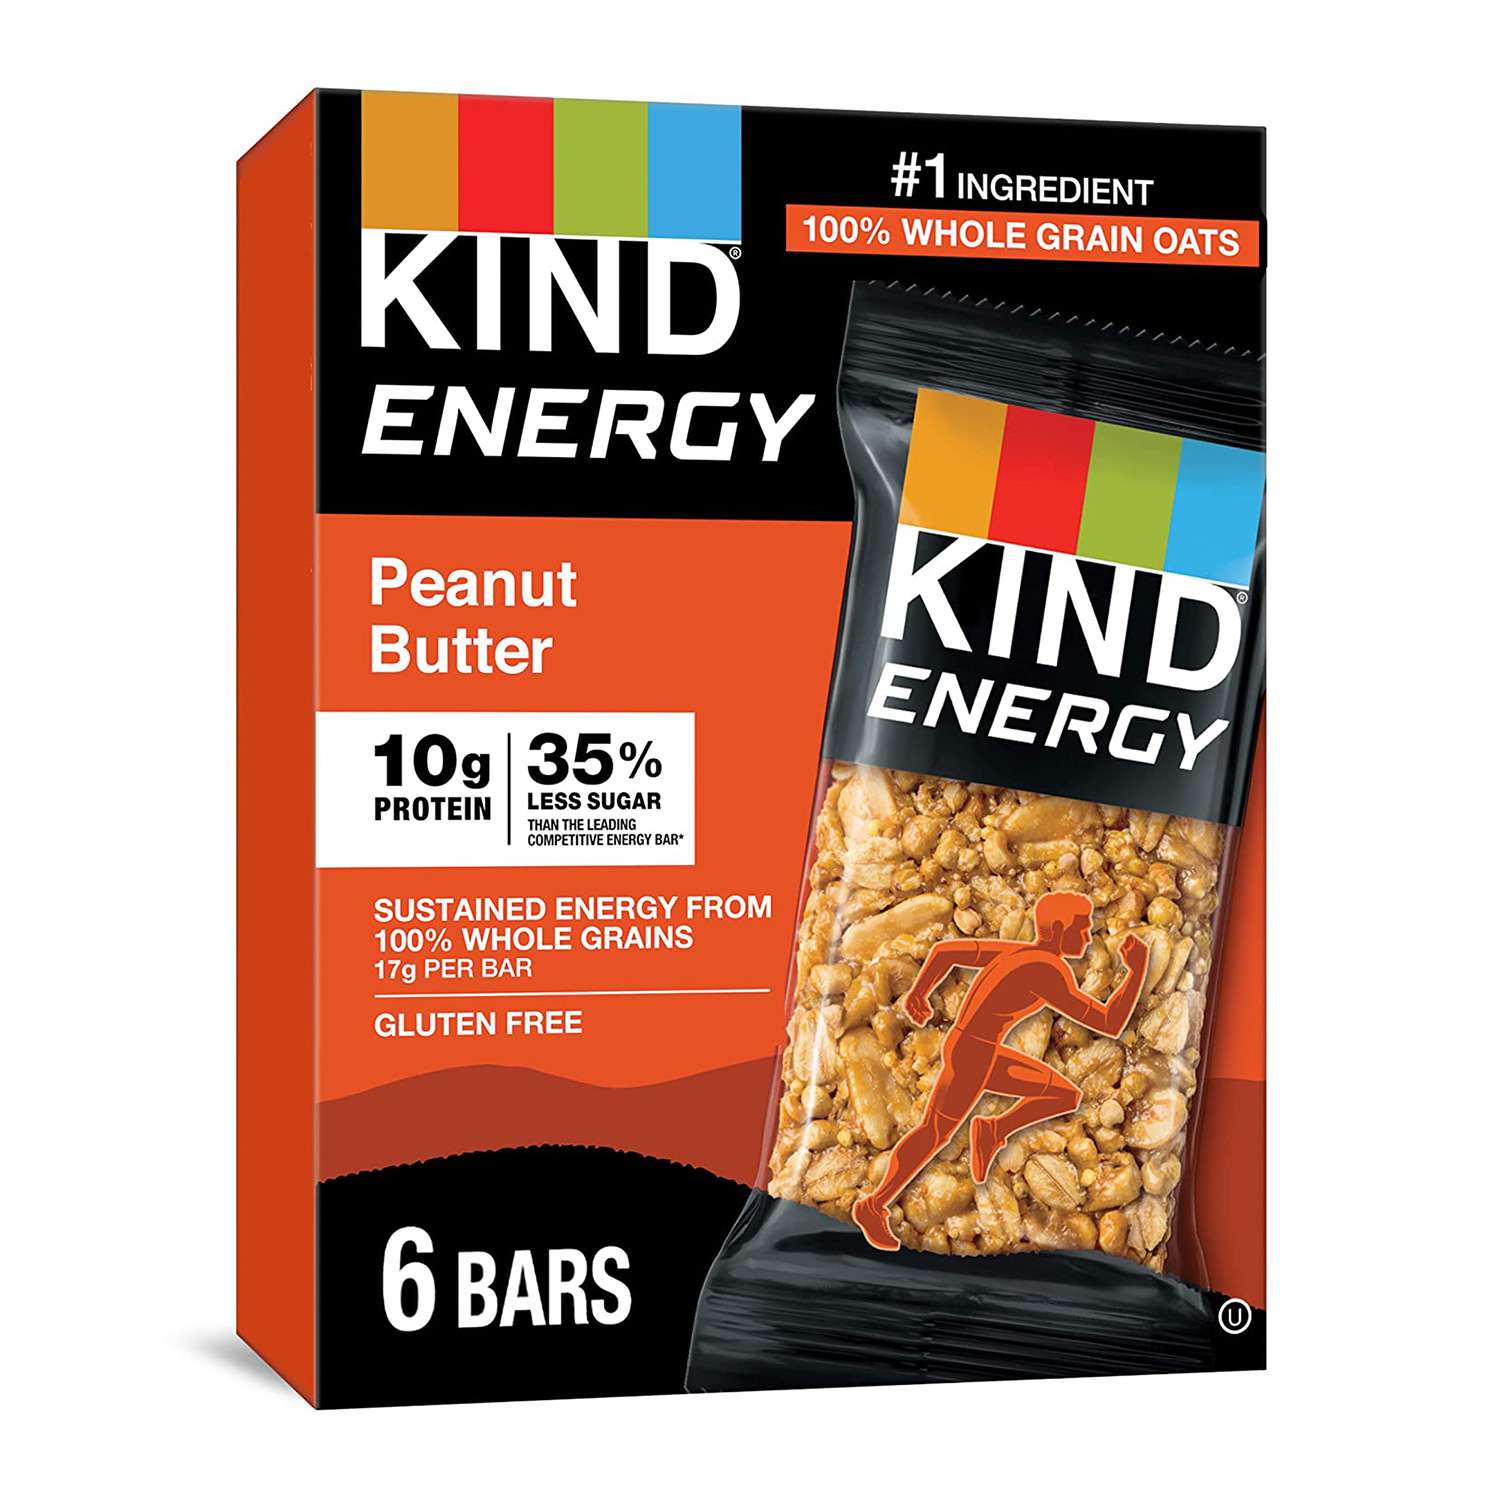 KIND Energy Bar in Peanut Butter